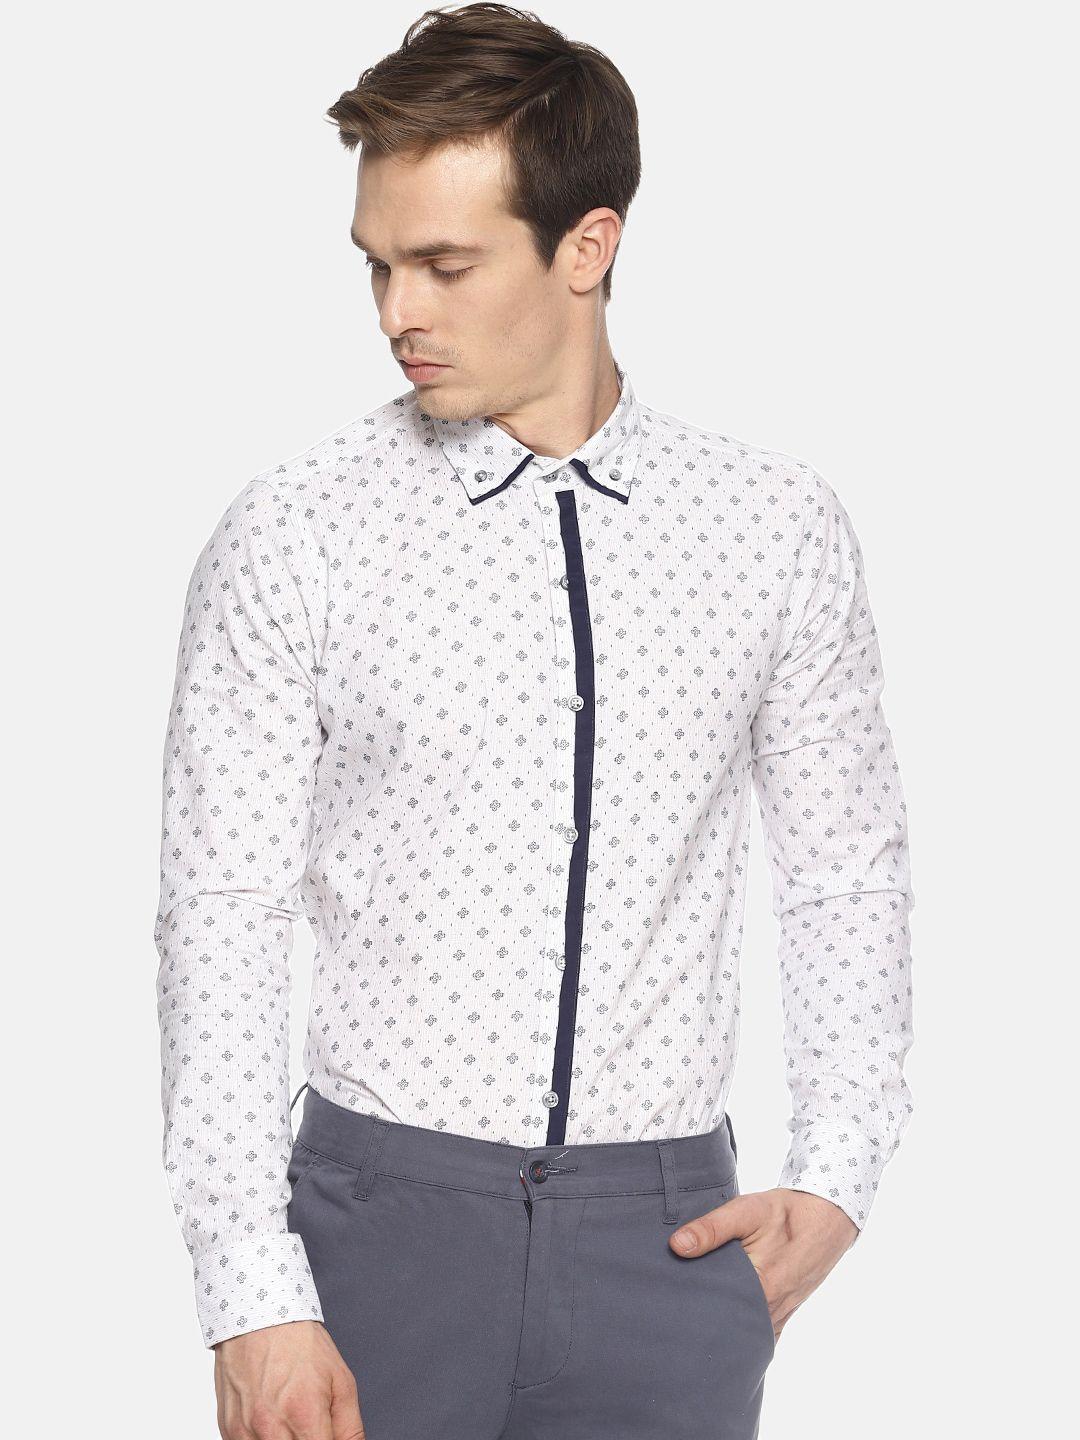 couper-&-coll-men-white-premium-slim-fit-printed-casual-shirt